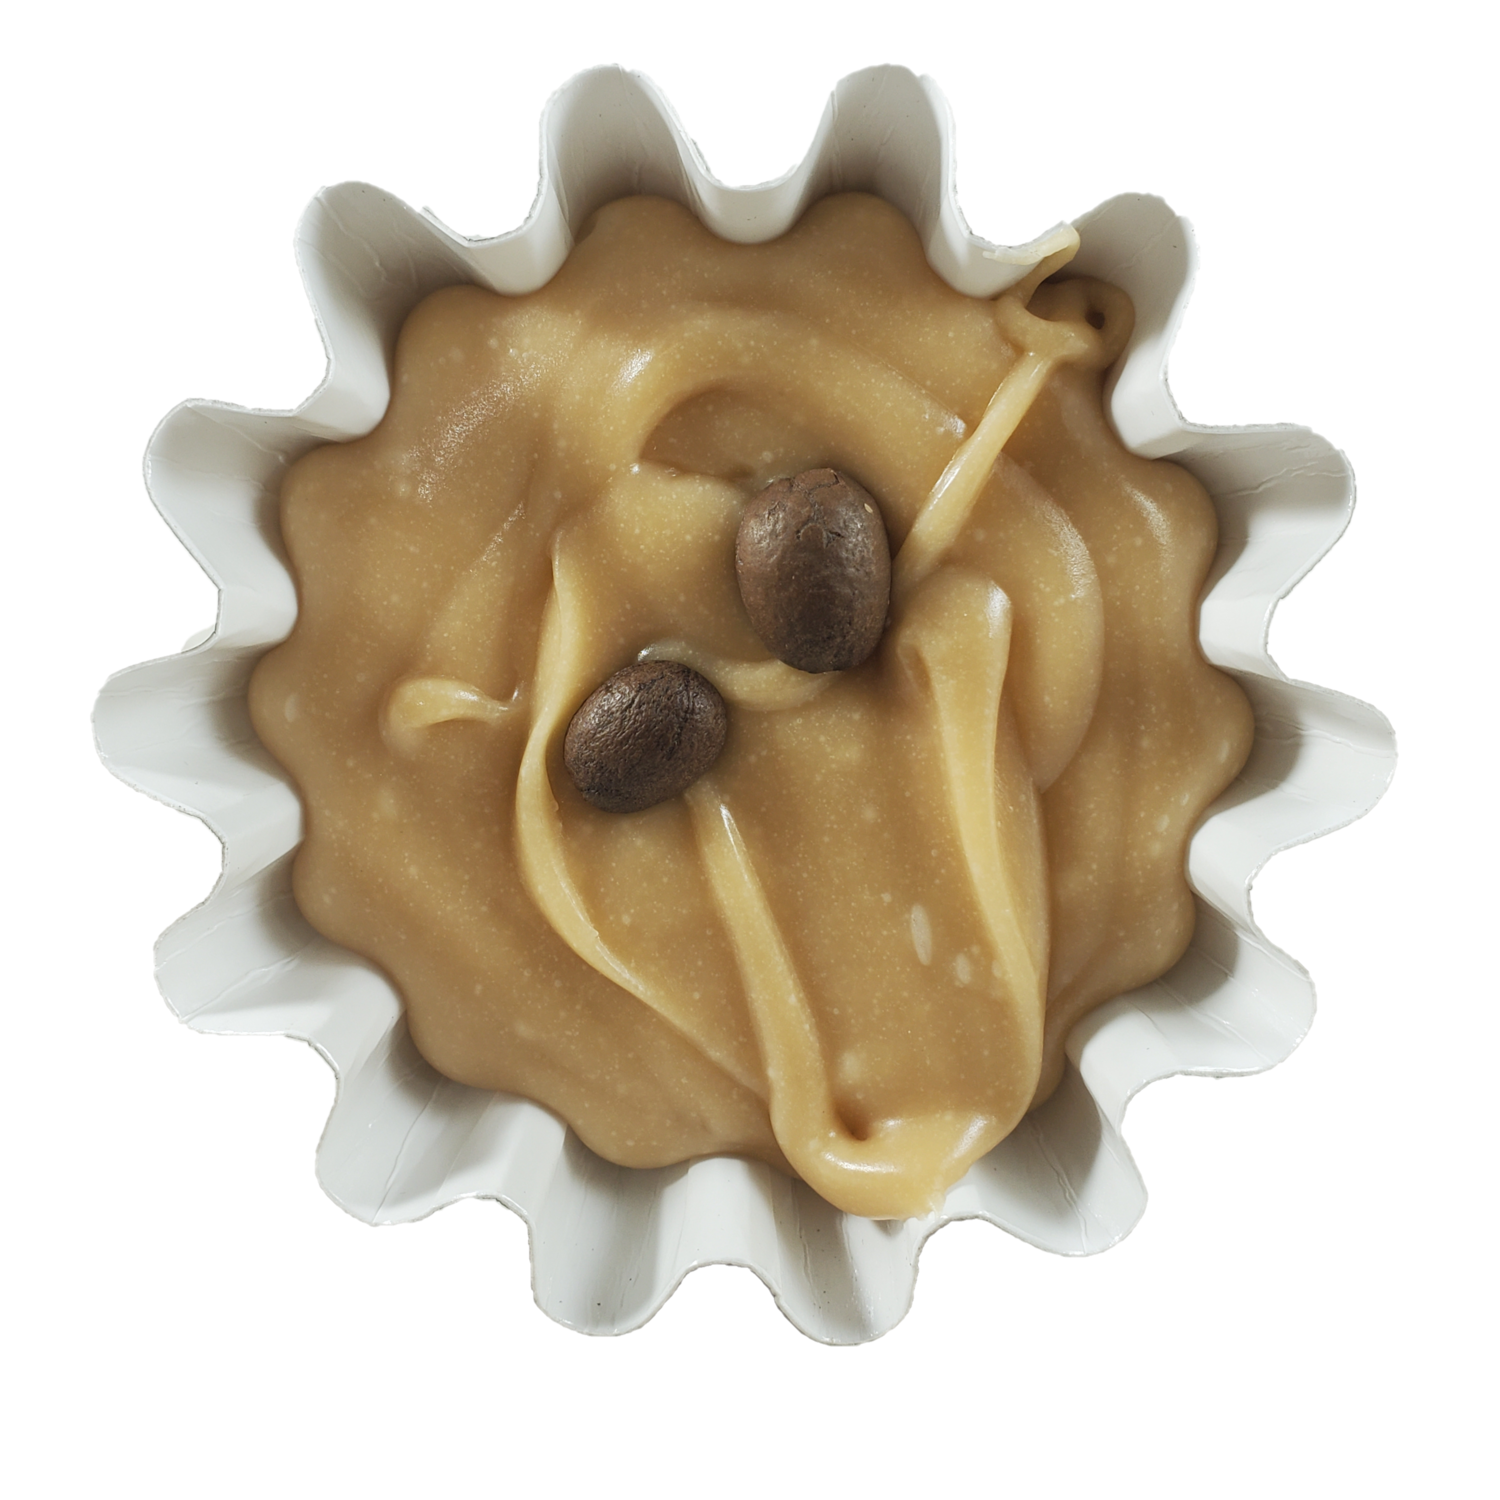 Cappuccino Fudge Cup - 2.25 Ounces